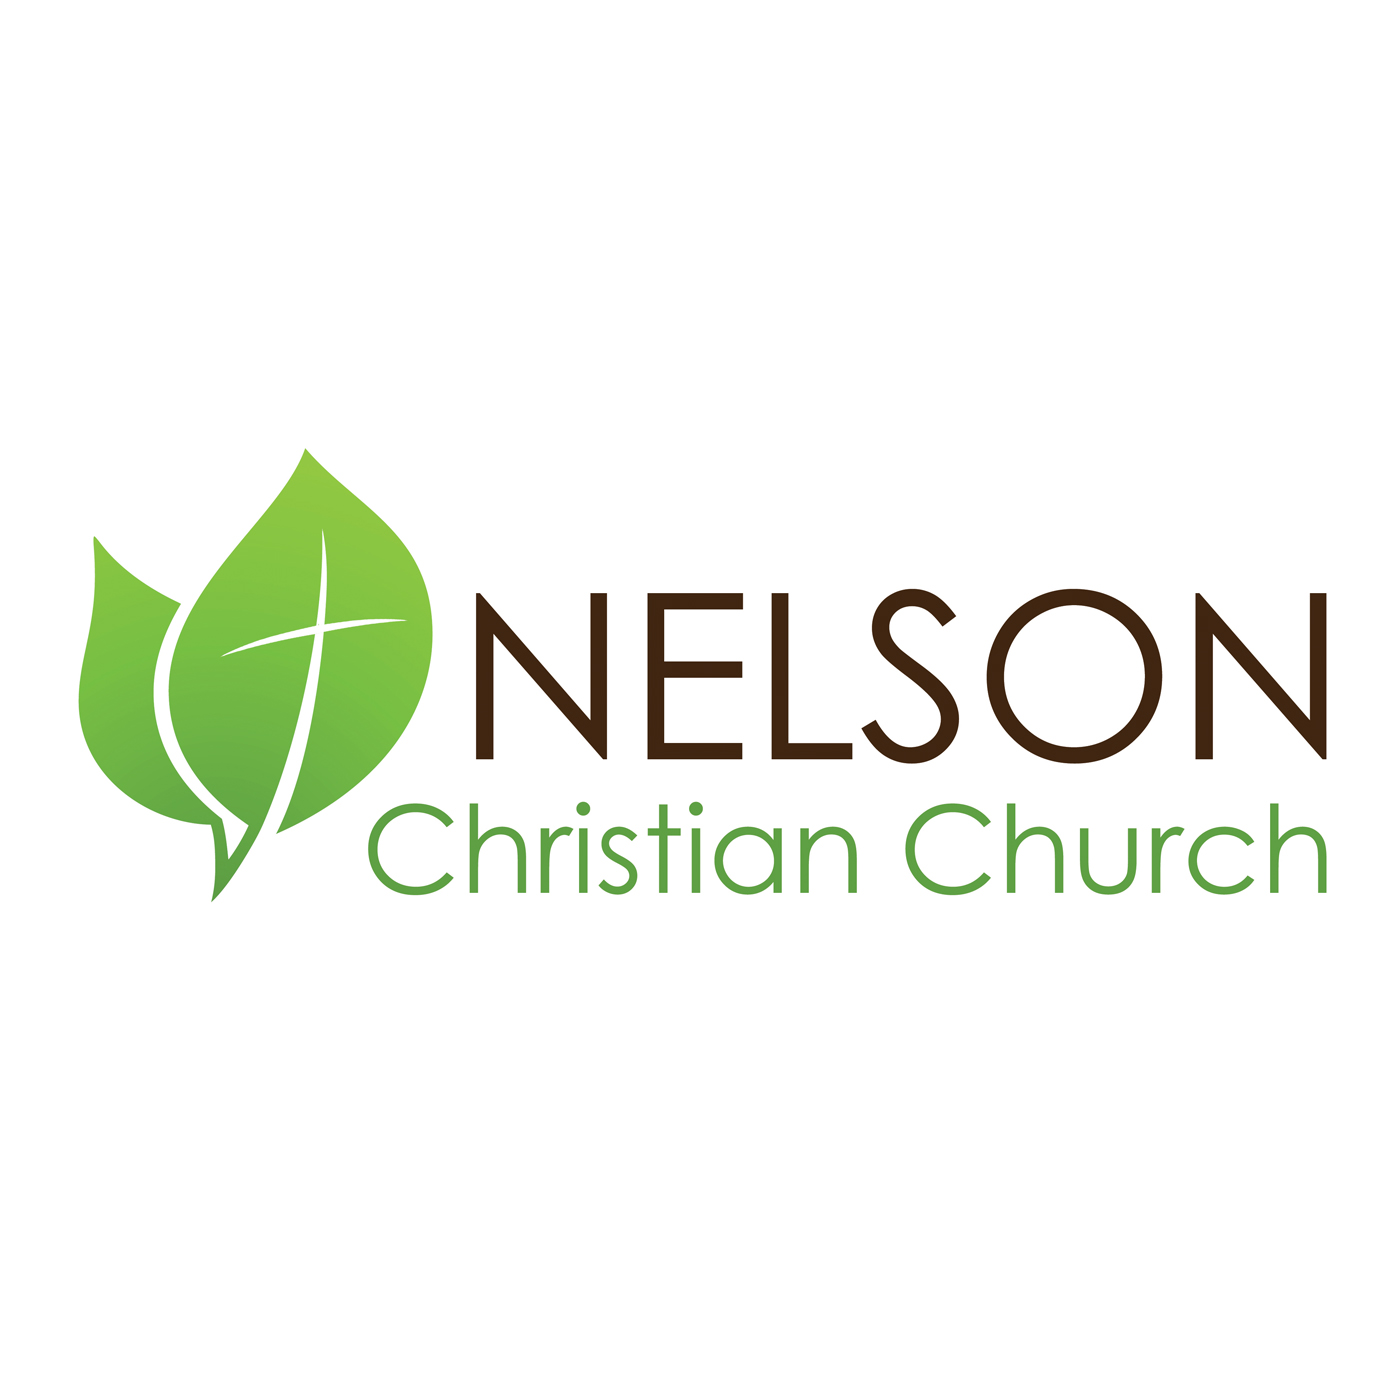 Nelson Christian